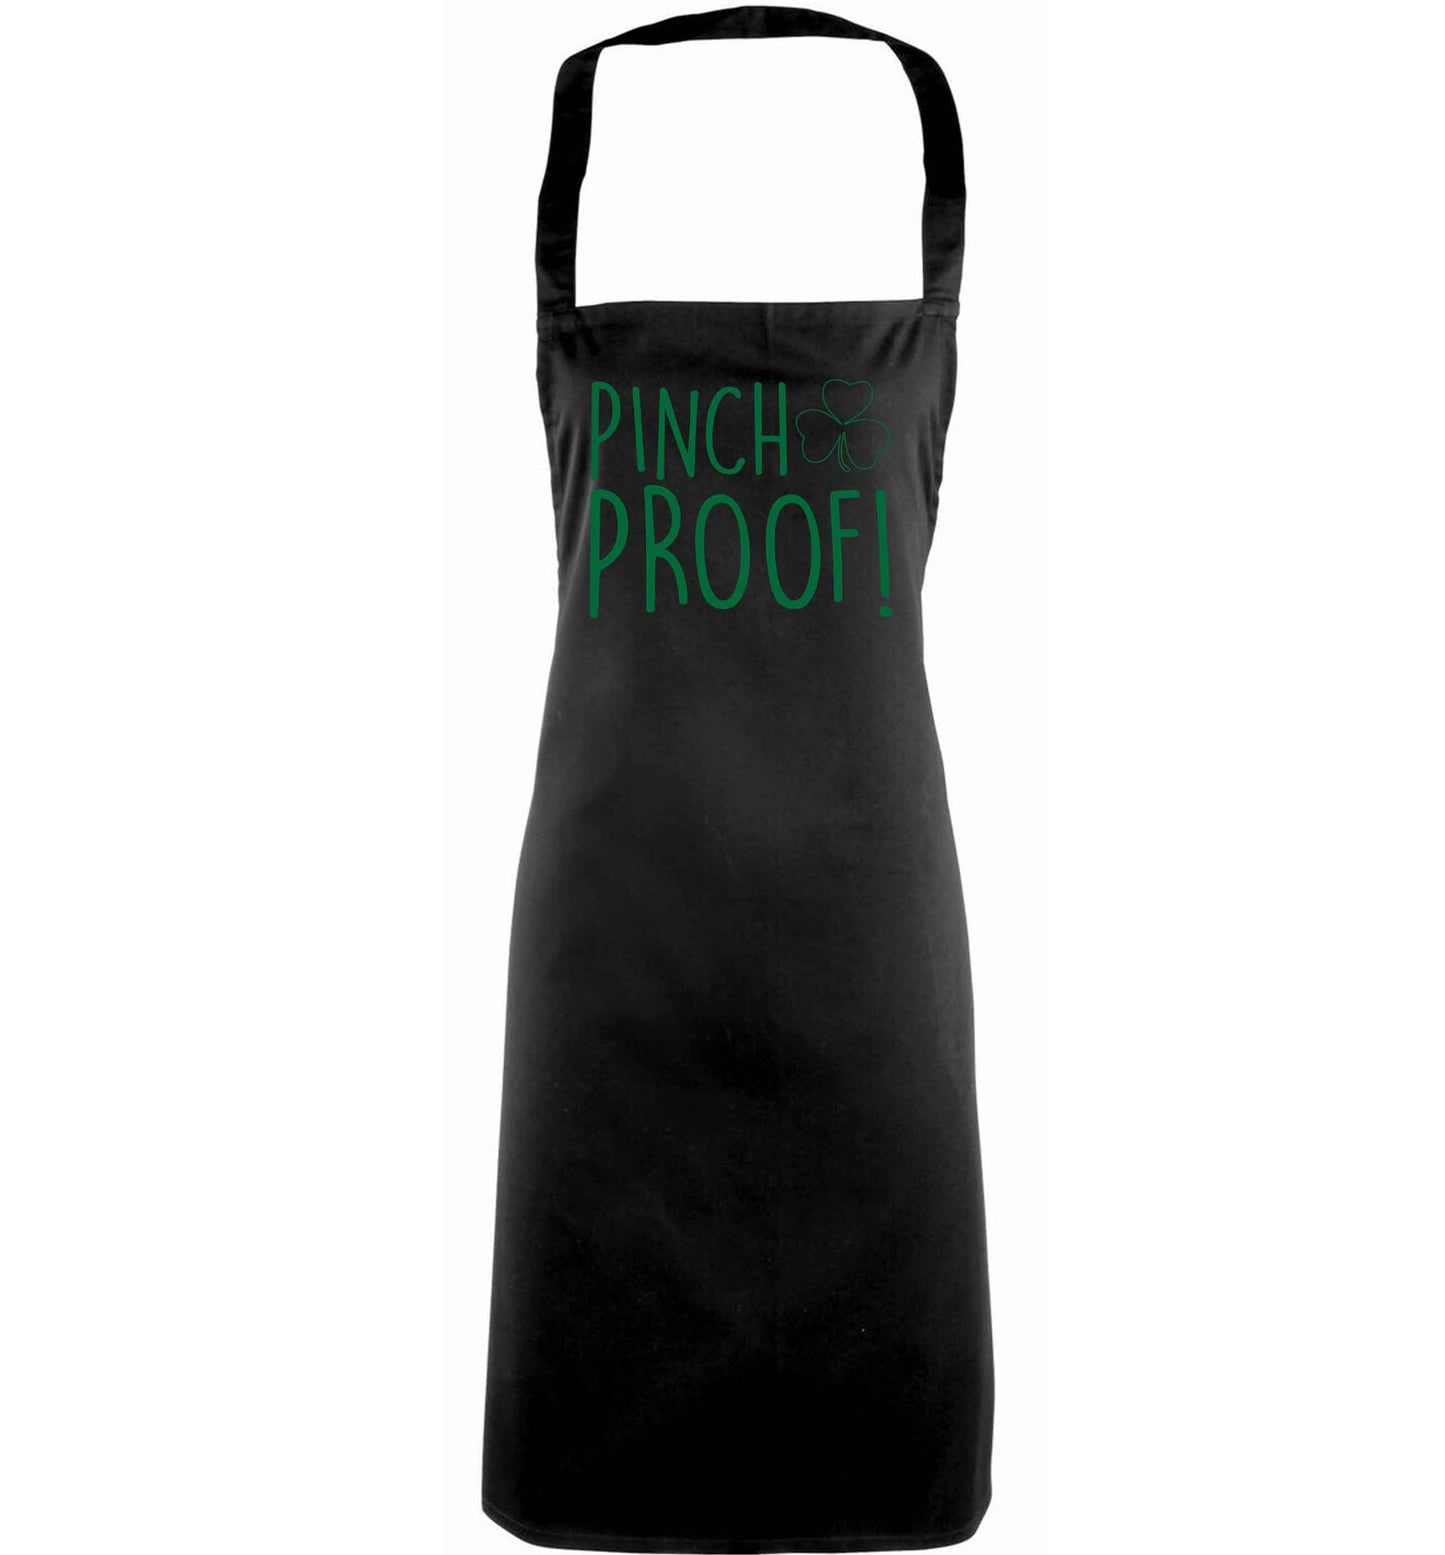 Pinch Proof adults black apron